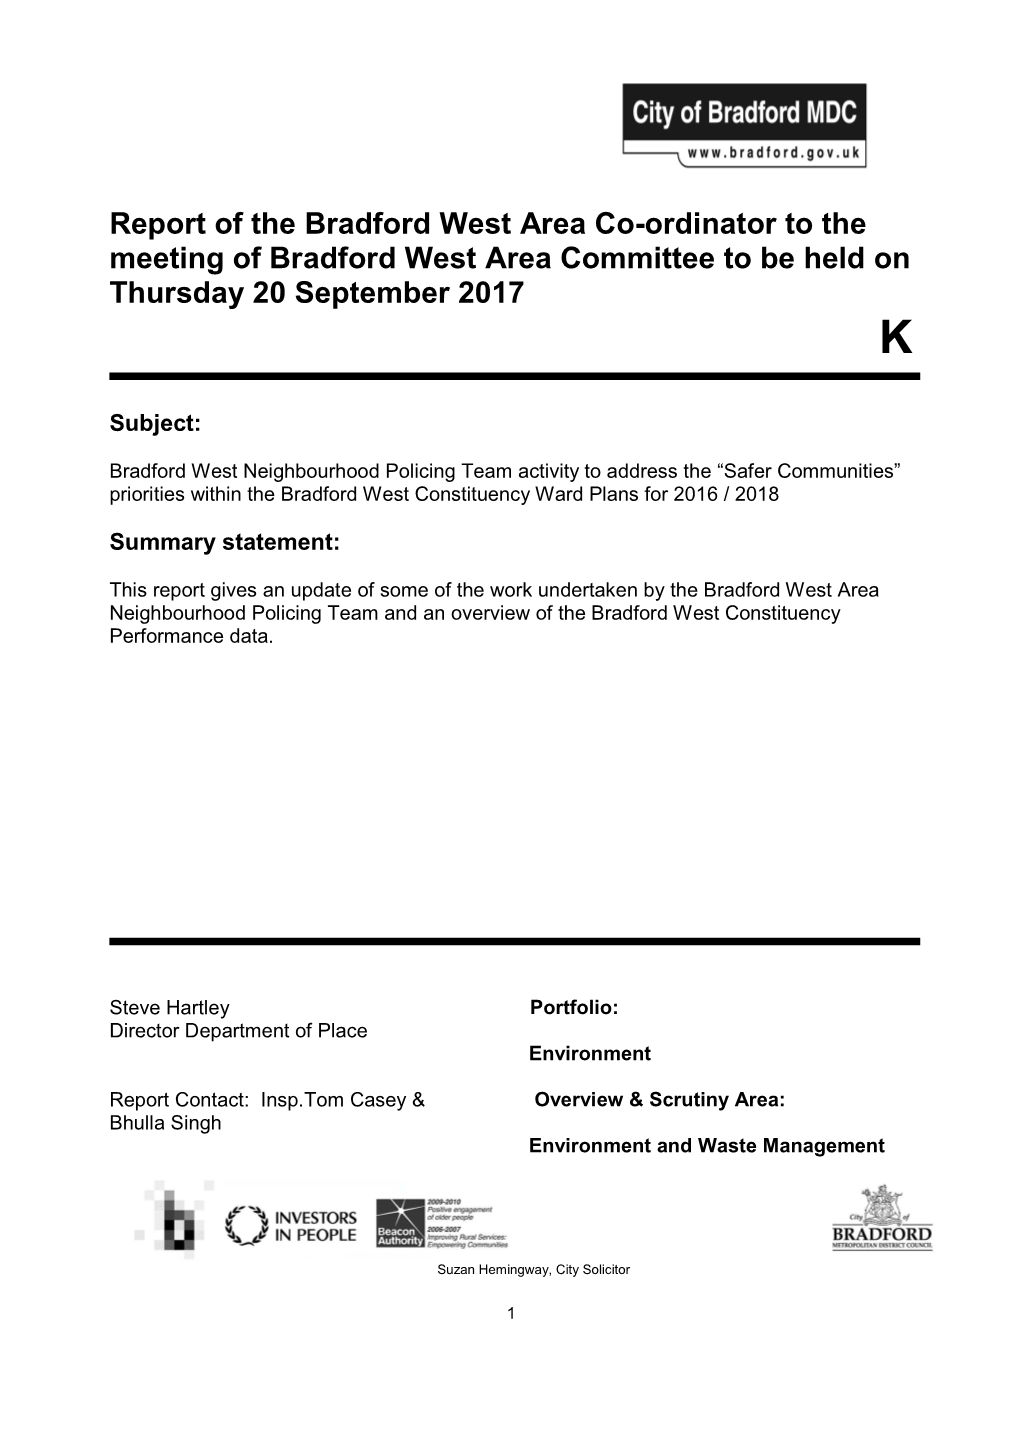 Report of the Bradford West Area Co-Ordinator to the Meeting of Bradford West Area Committee to Be Held on Thursday 20 September 2017 K